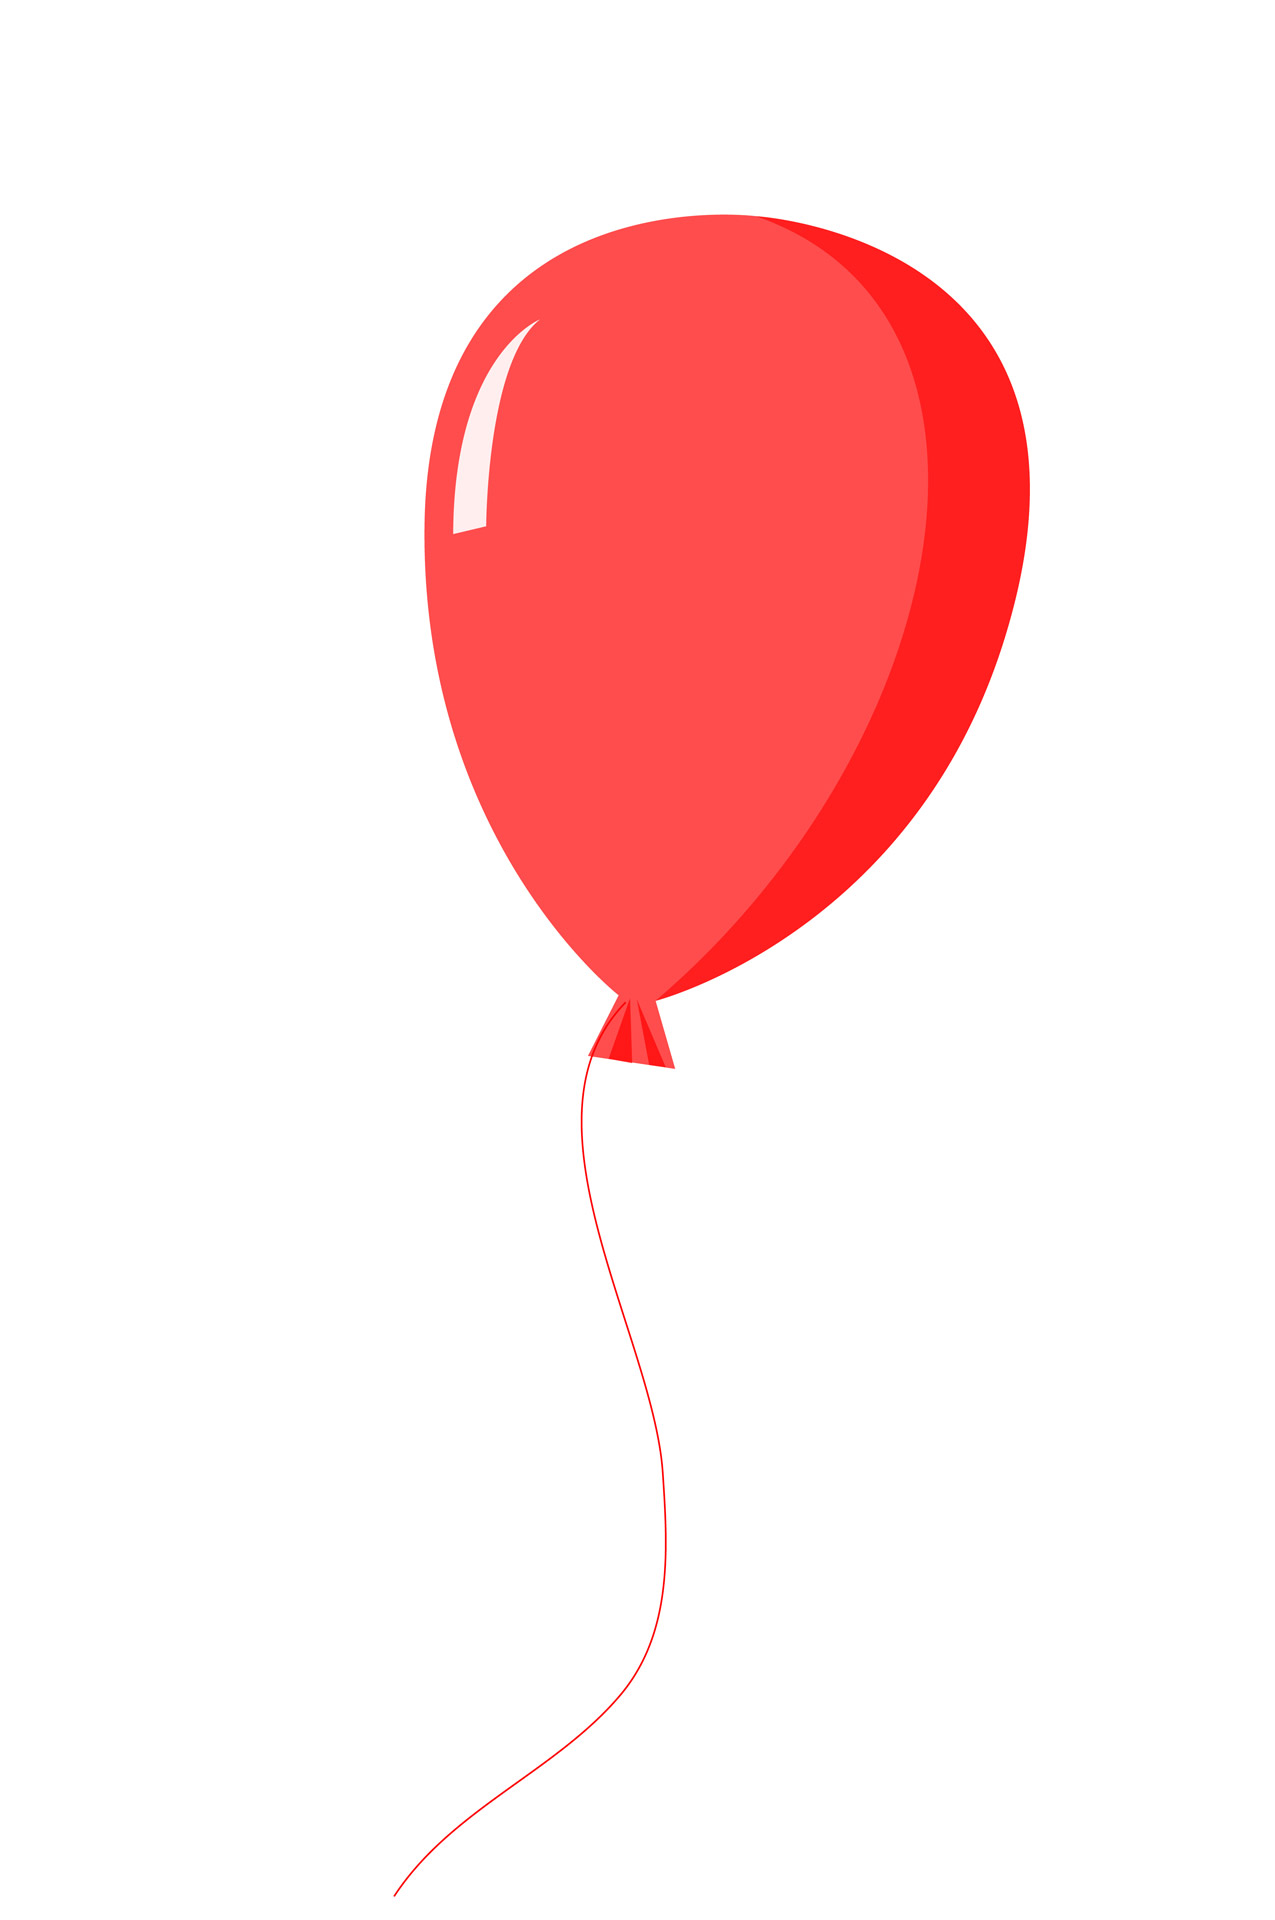 Clip art of balloons